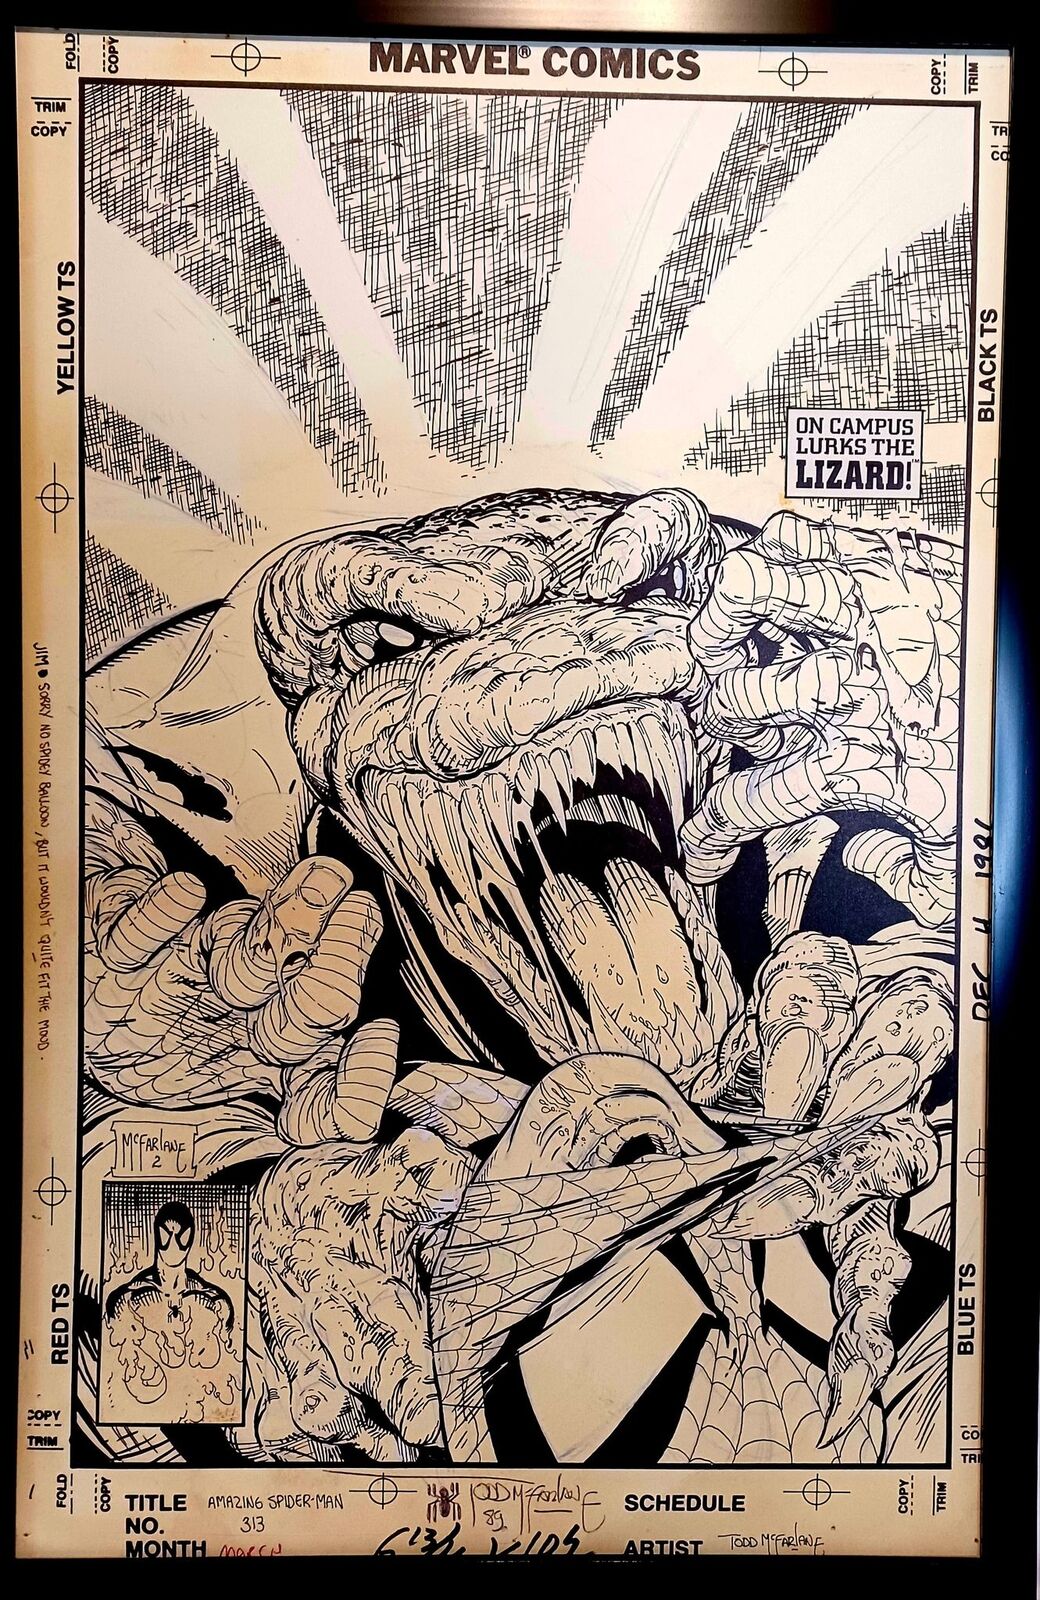 Amazing Spider-Man #313 by Todd McFarlane 11x17 FRAMED Original Art Print Comic 